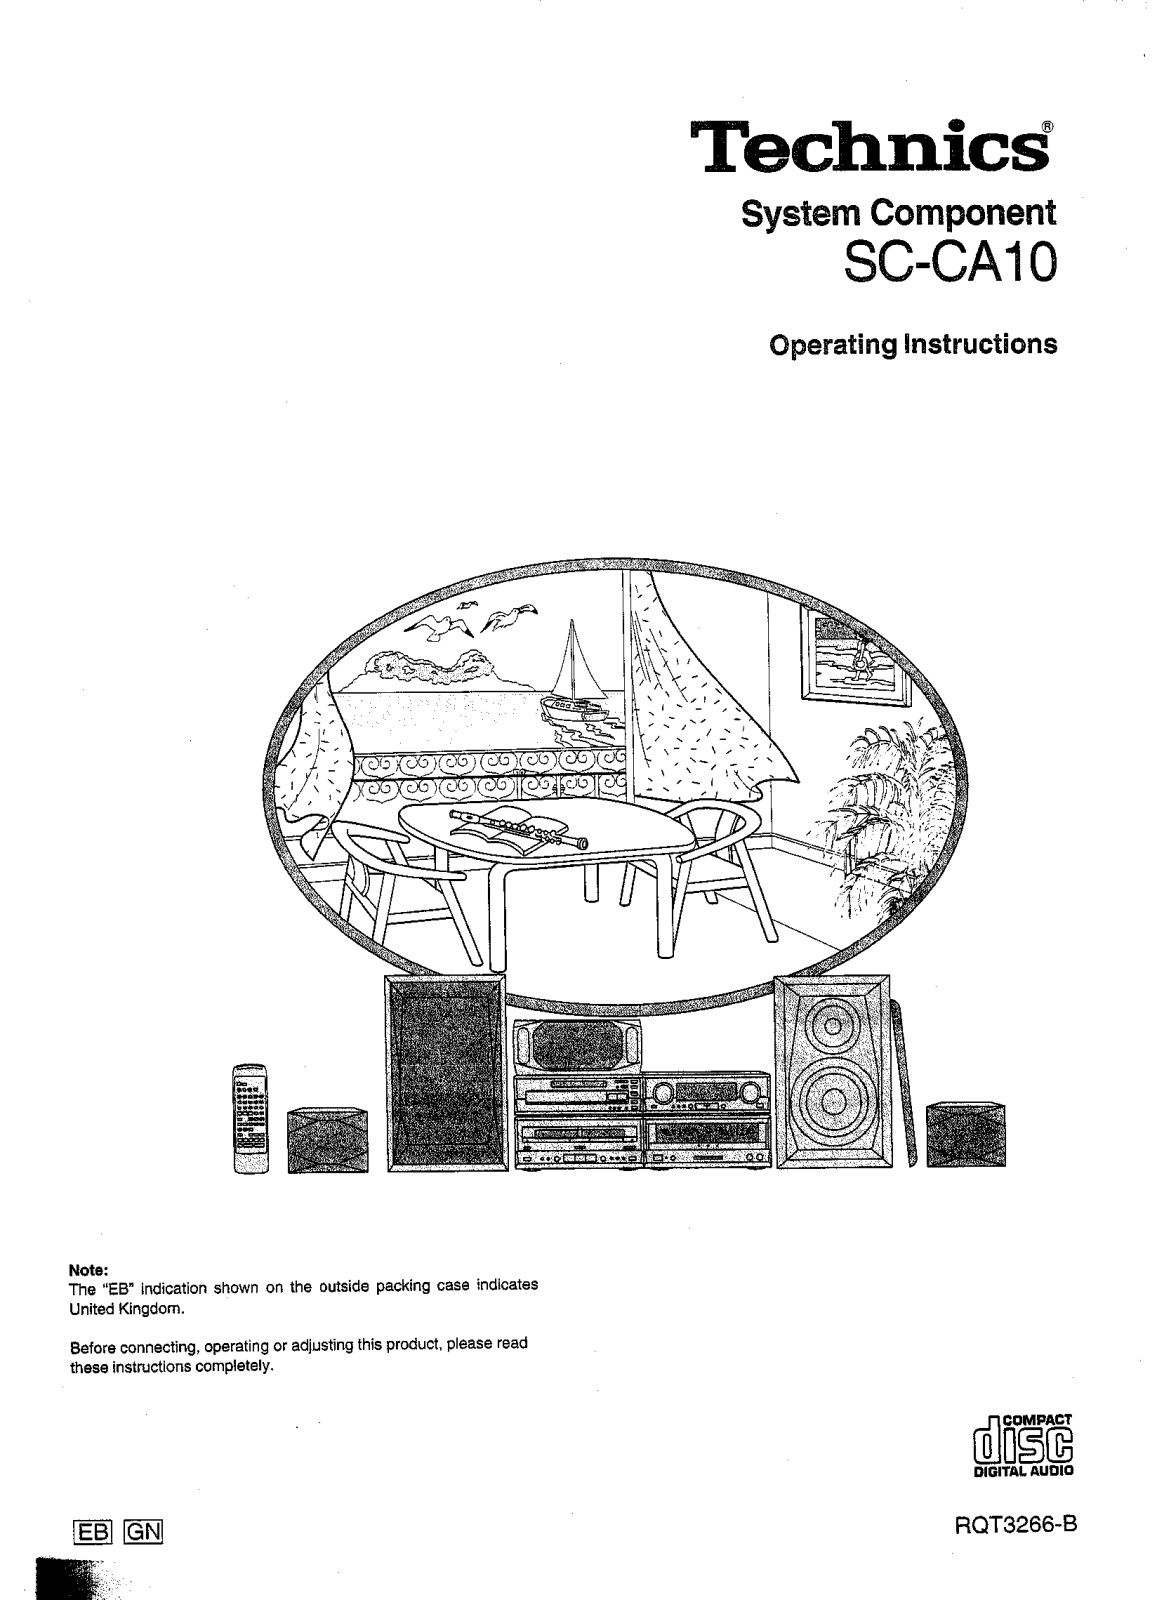 Technics SC-CA10 Operating Instruction